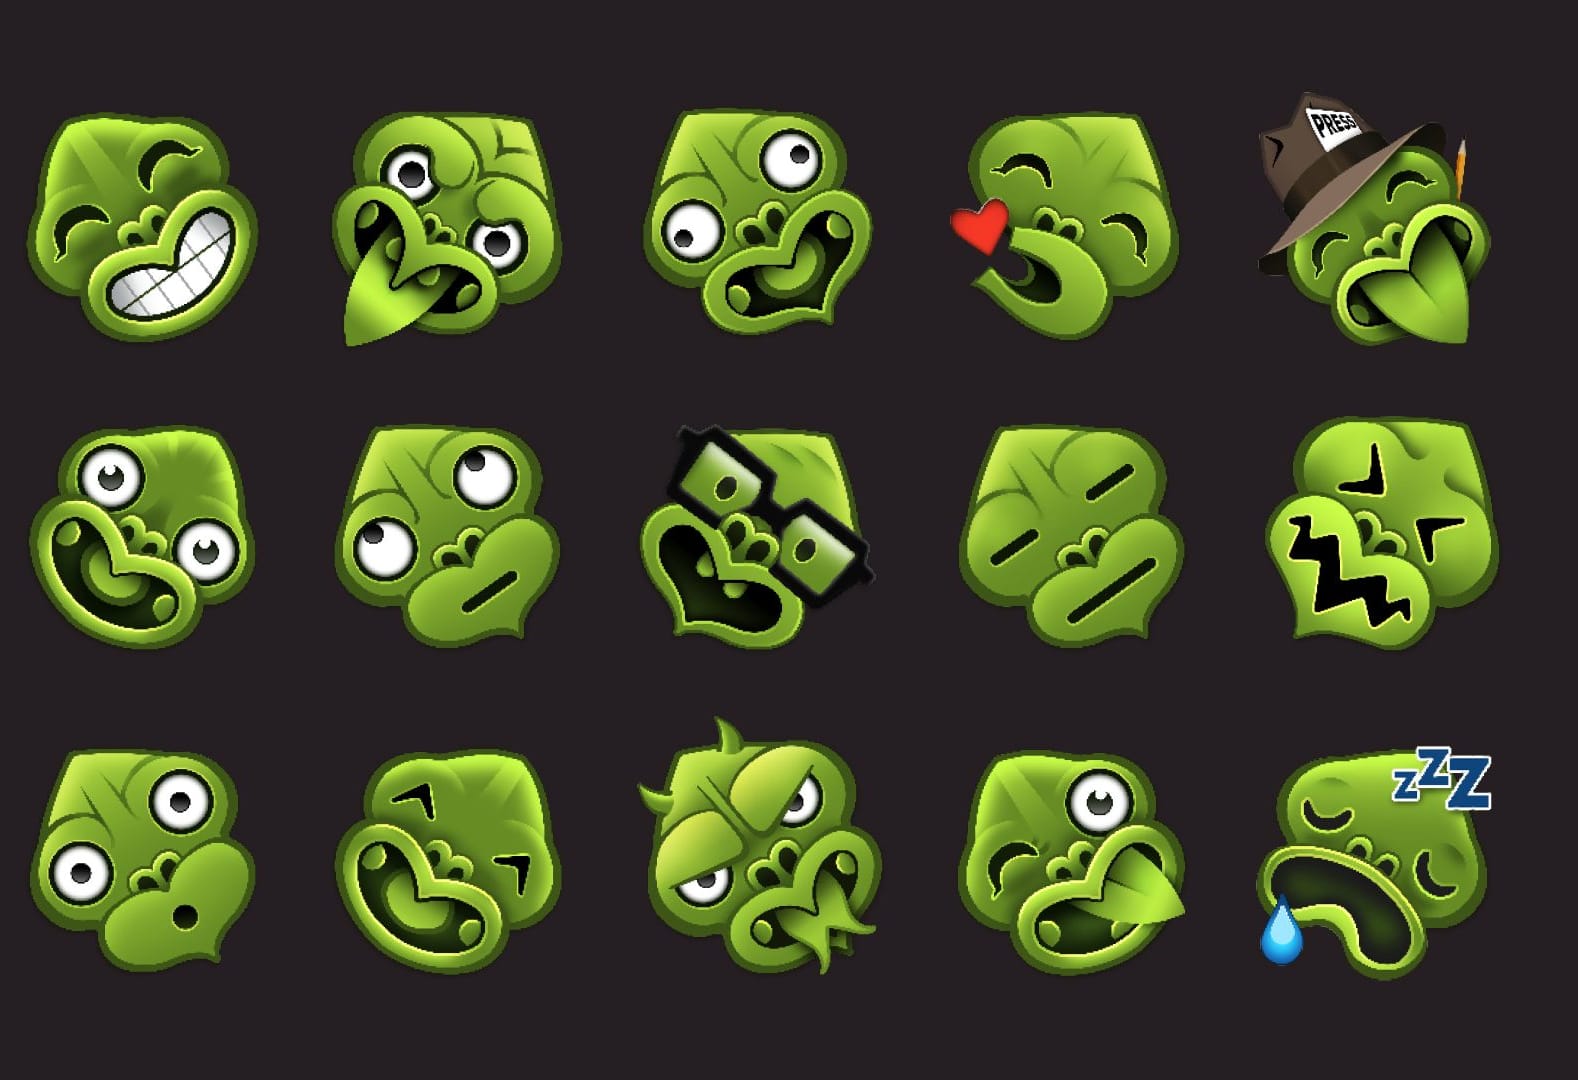 Some of the emotiki - the Māori emoji